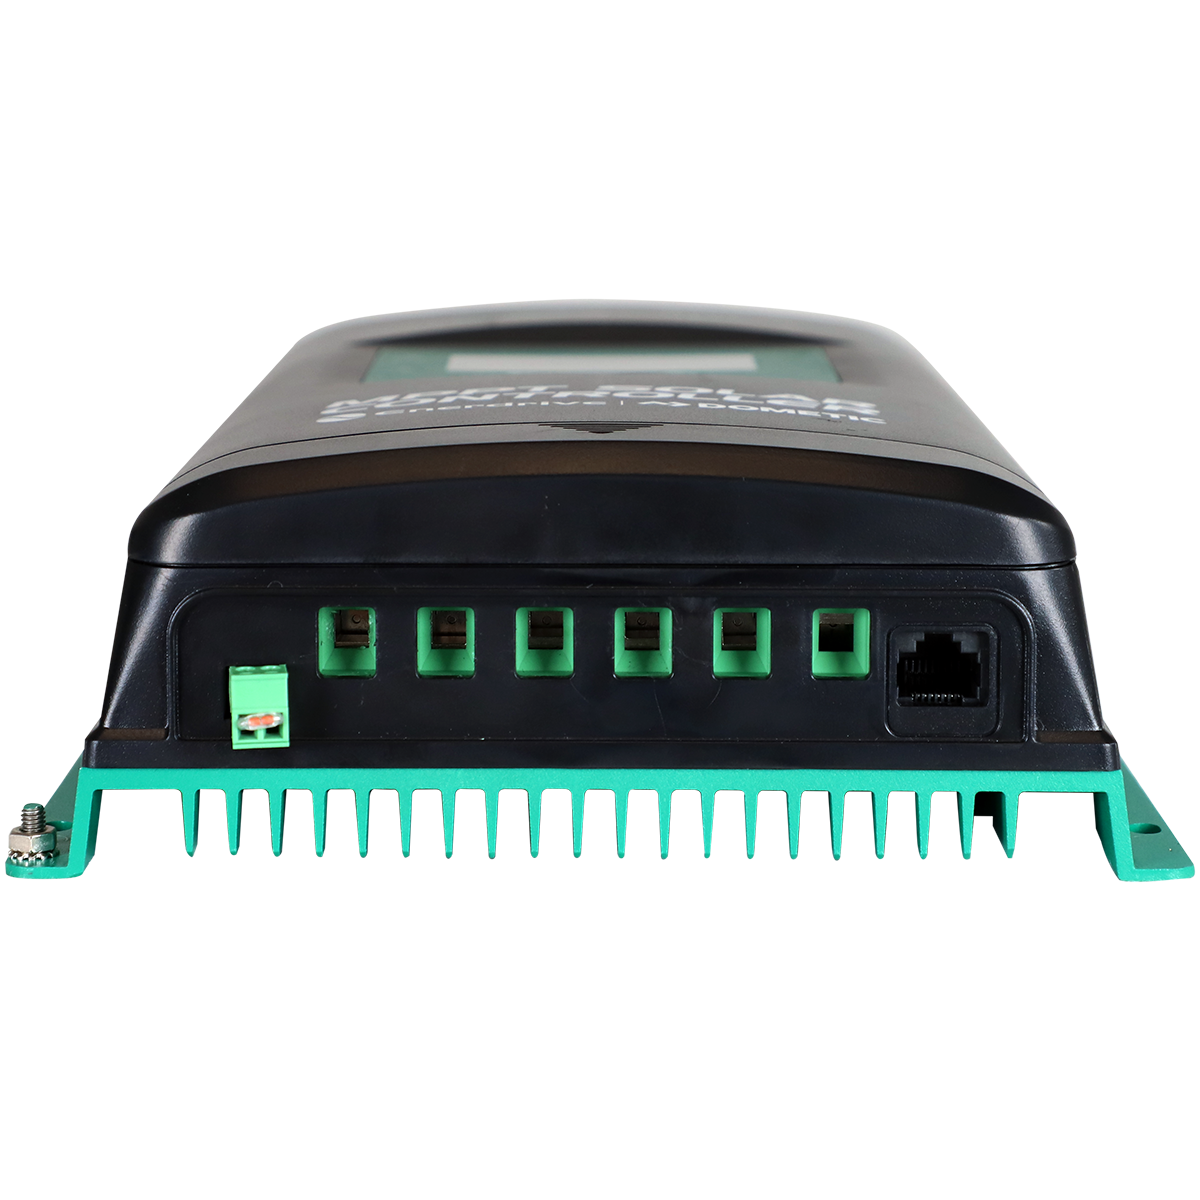 Enerdrive 40A MPPT Solar Charge Controller 12/24v with Display - EN43540 | Enerdrive